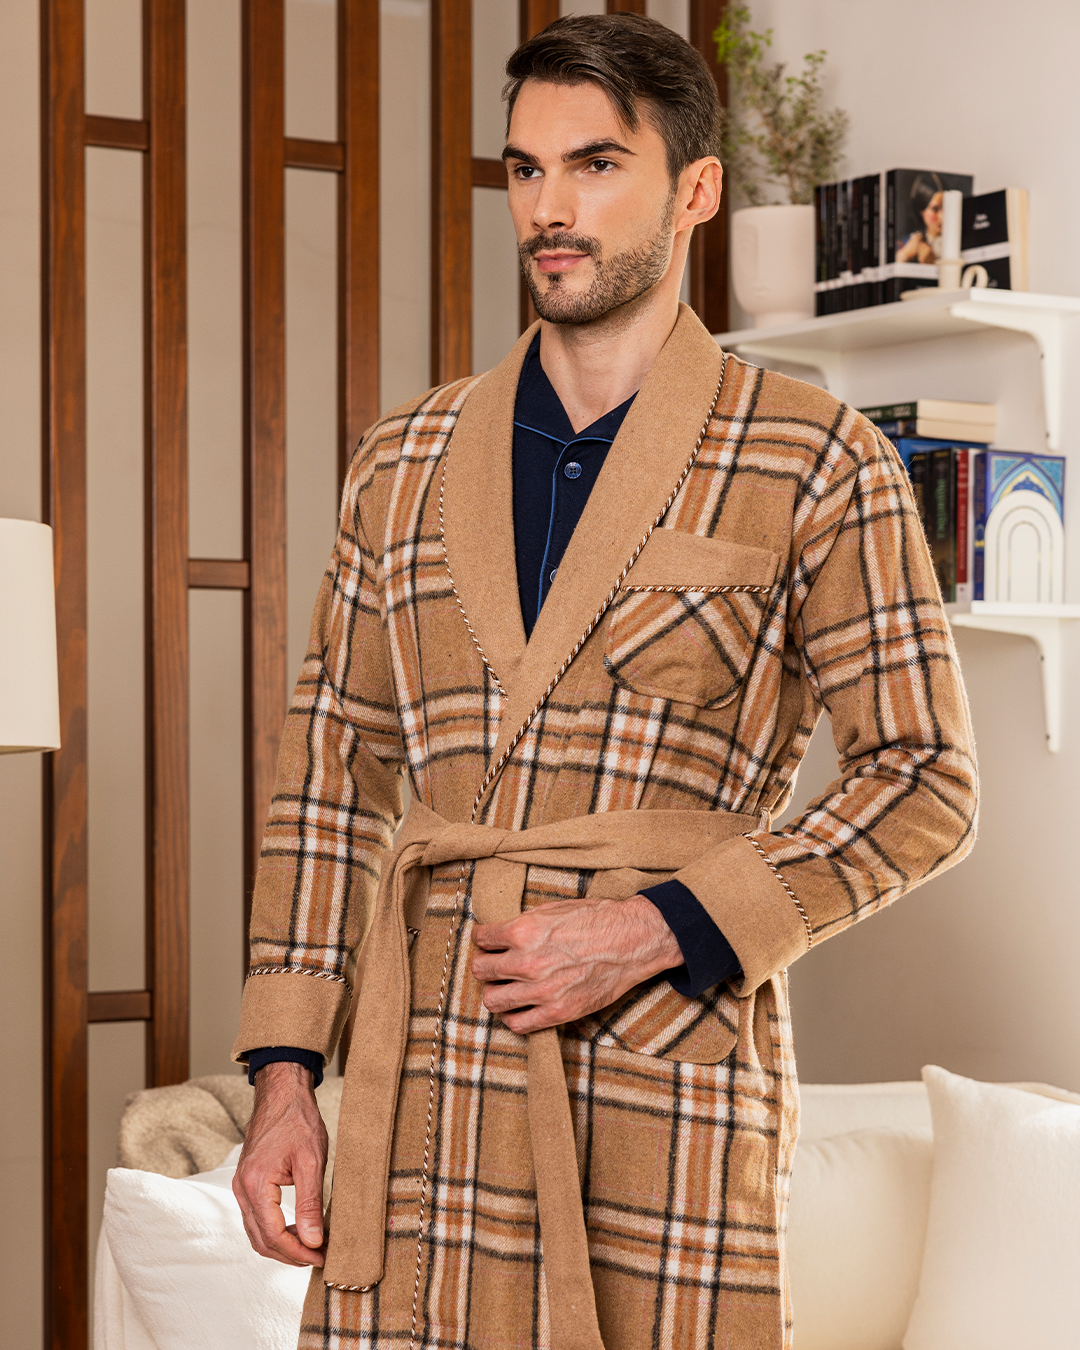 Men's checkered robe